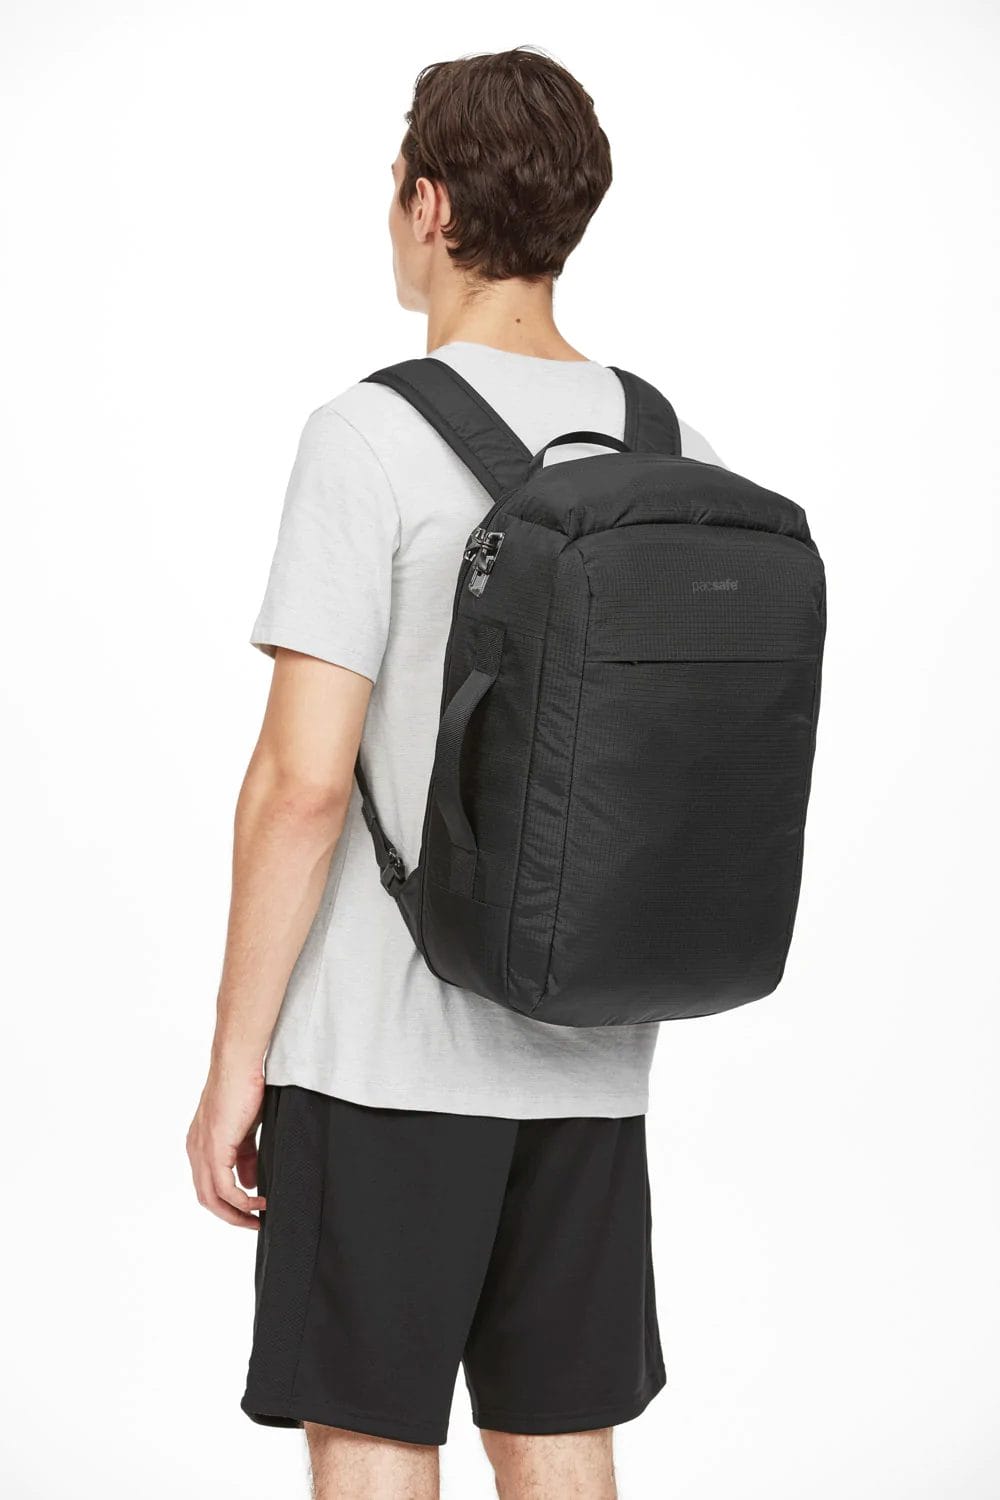 PacSafe Vibe 28L Anti-Theft Backpack - Jet Black - Irv's Luggage